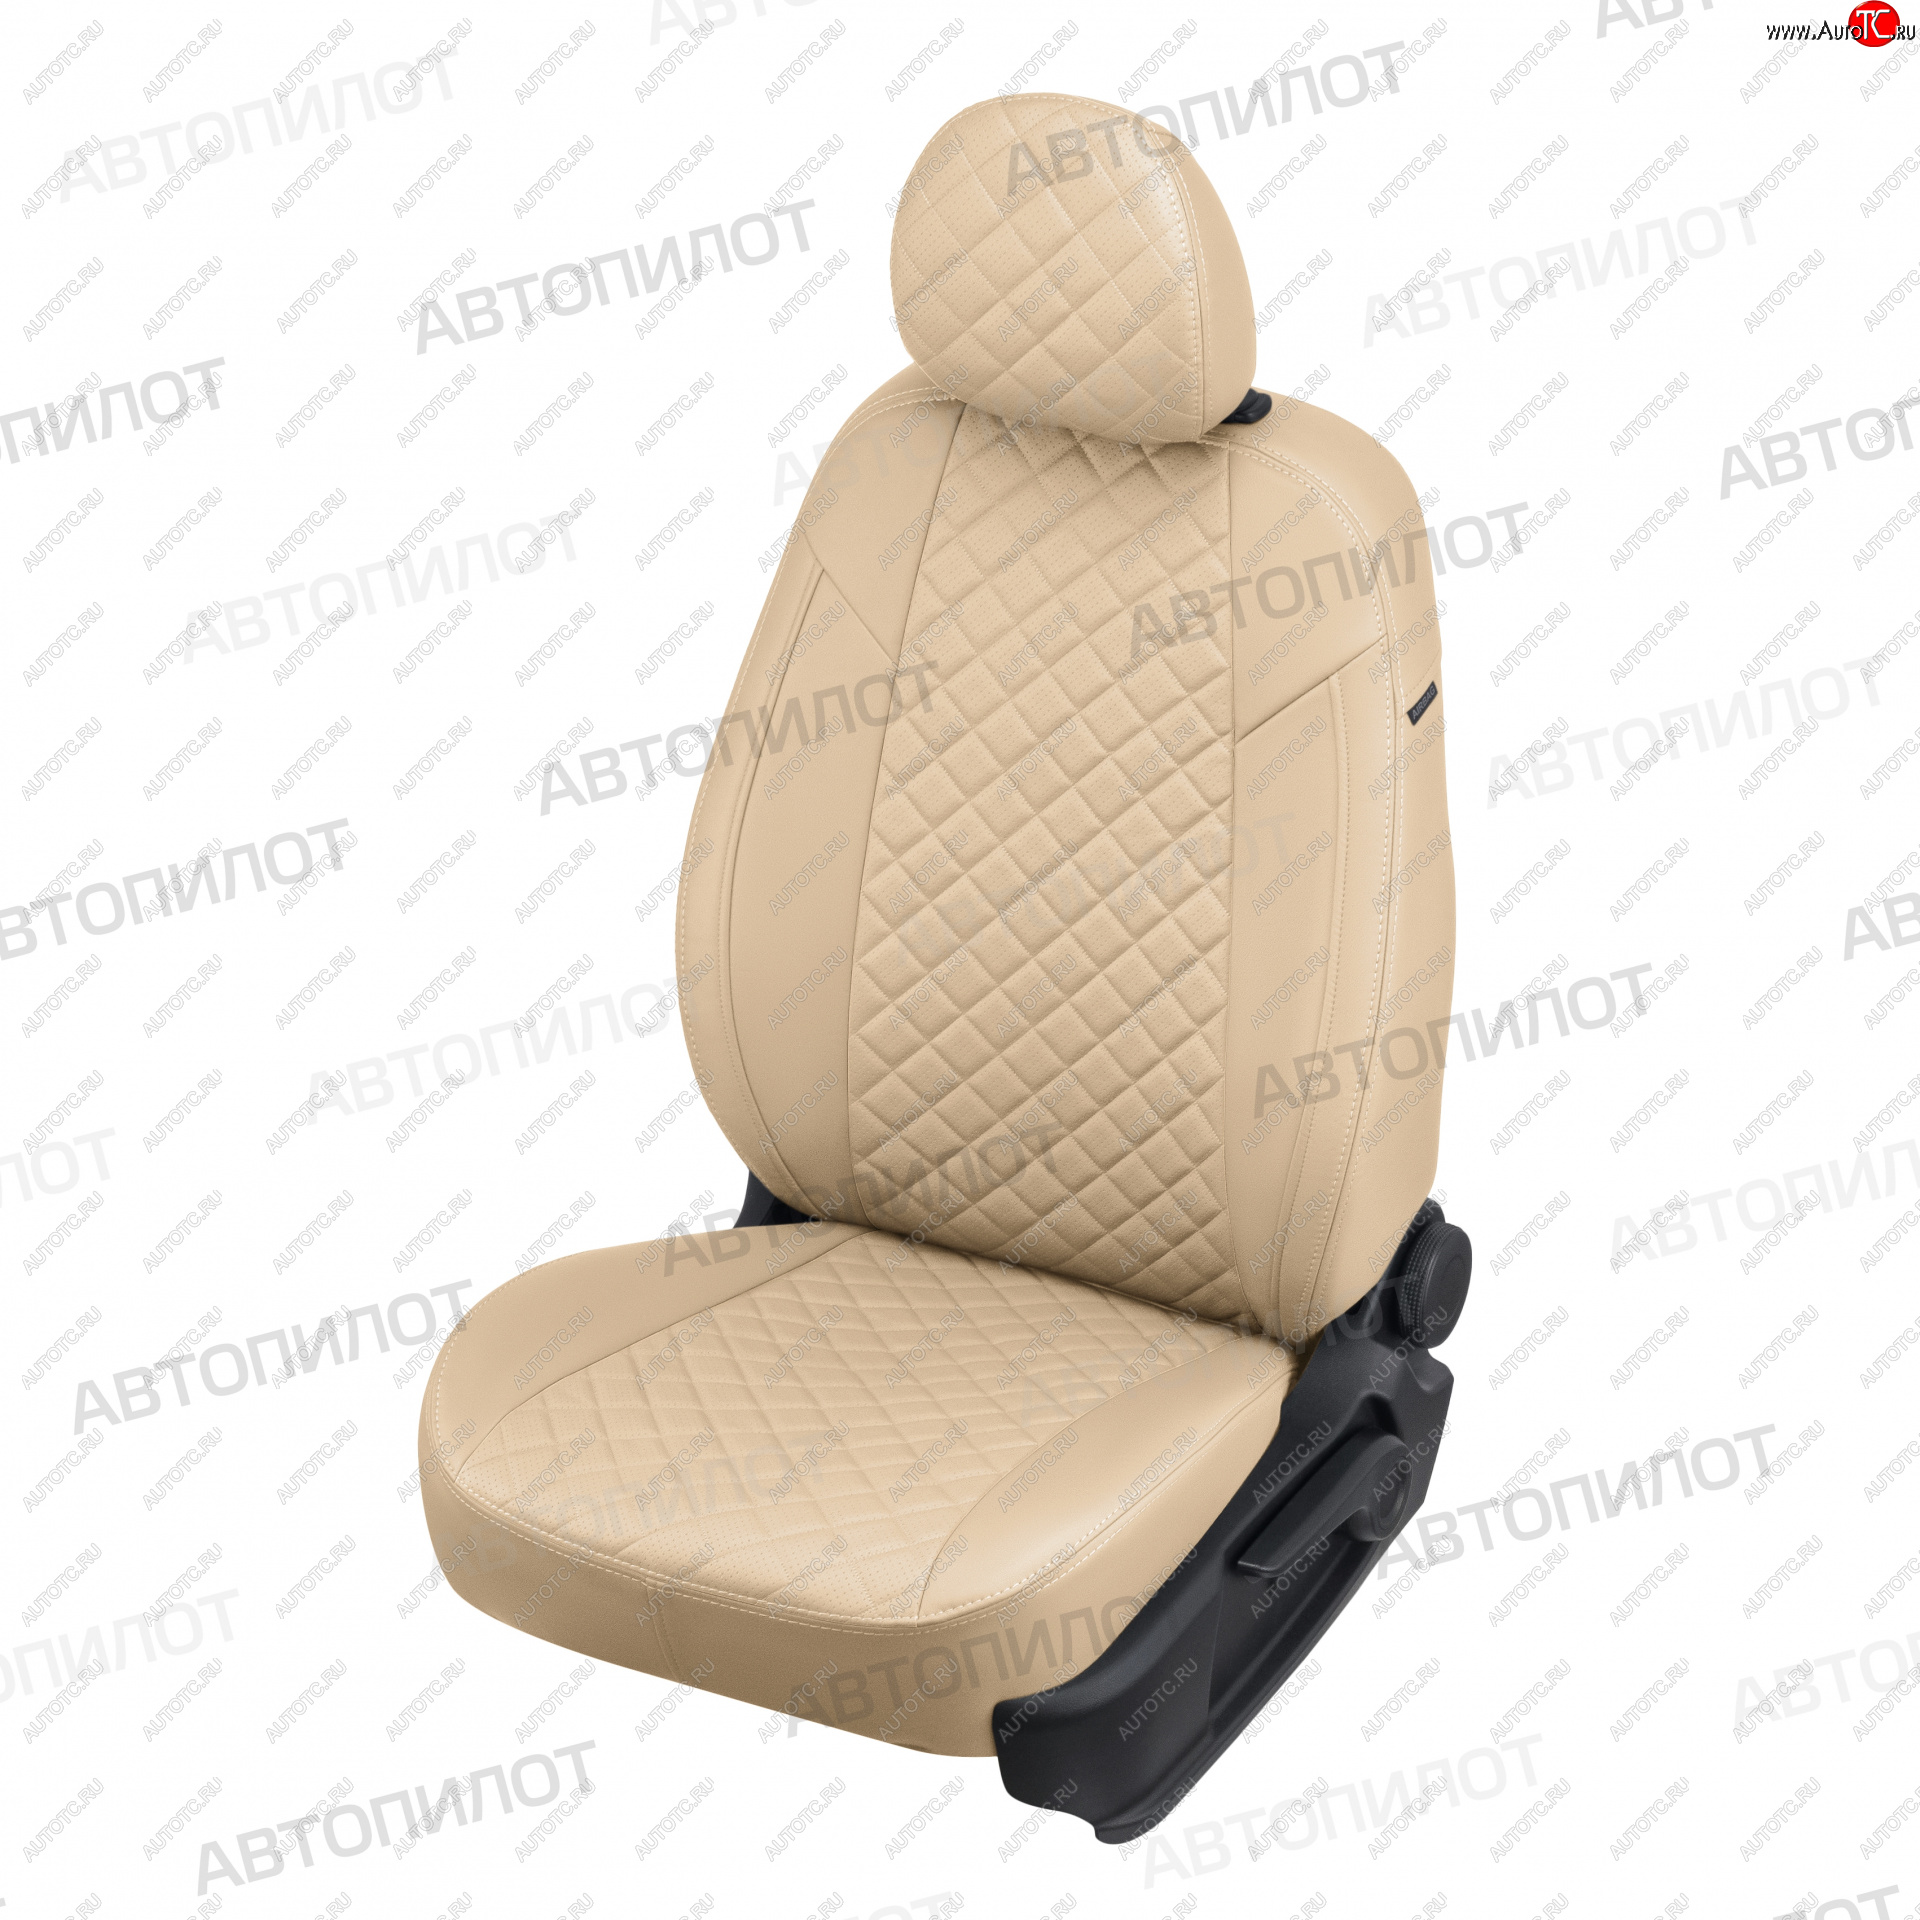 7 799 р. Чехлы сидений (5 мест, экокожа) Автопилот Ромб  Ford Galaxy  2 (2006-2015) (бежевый)